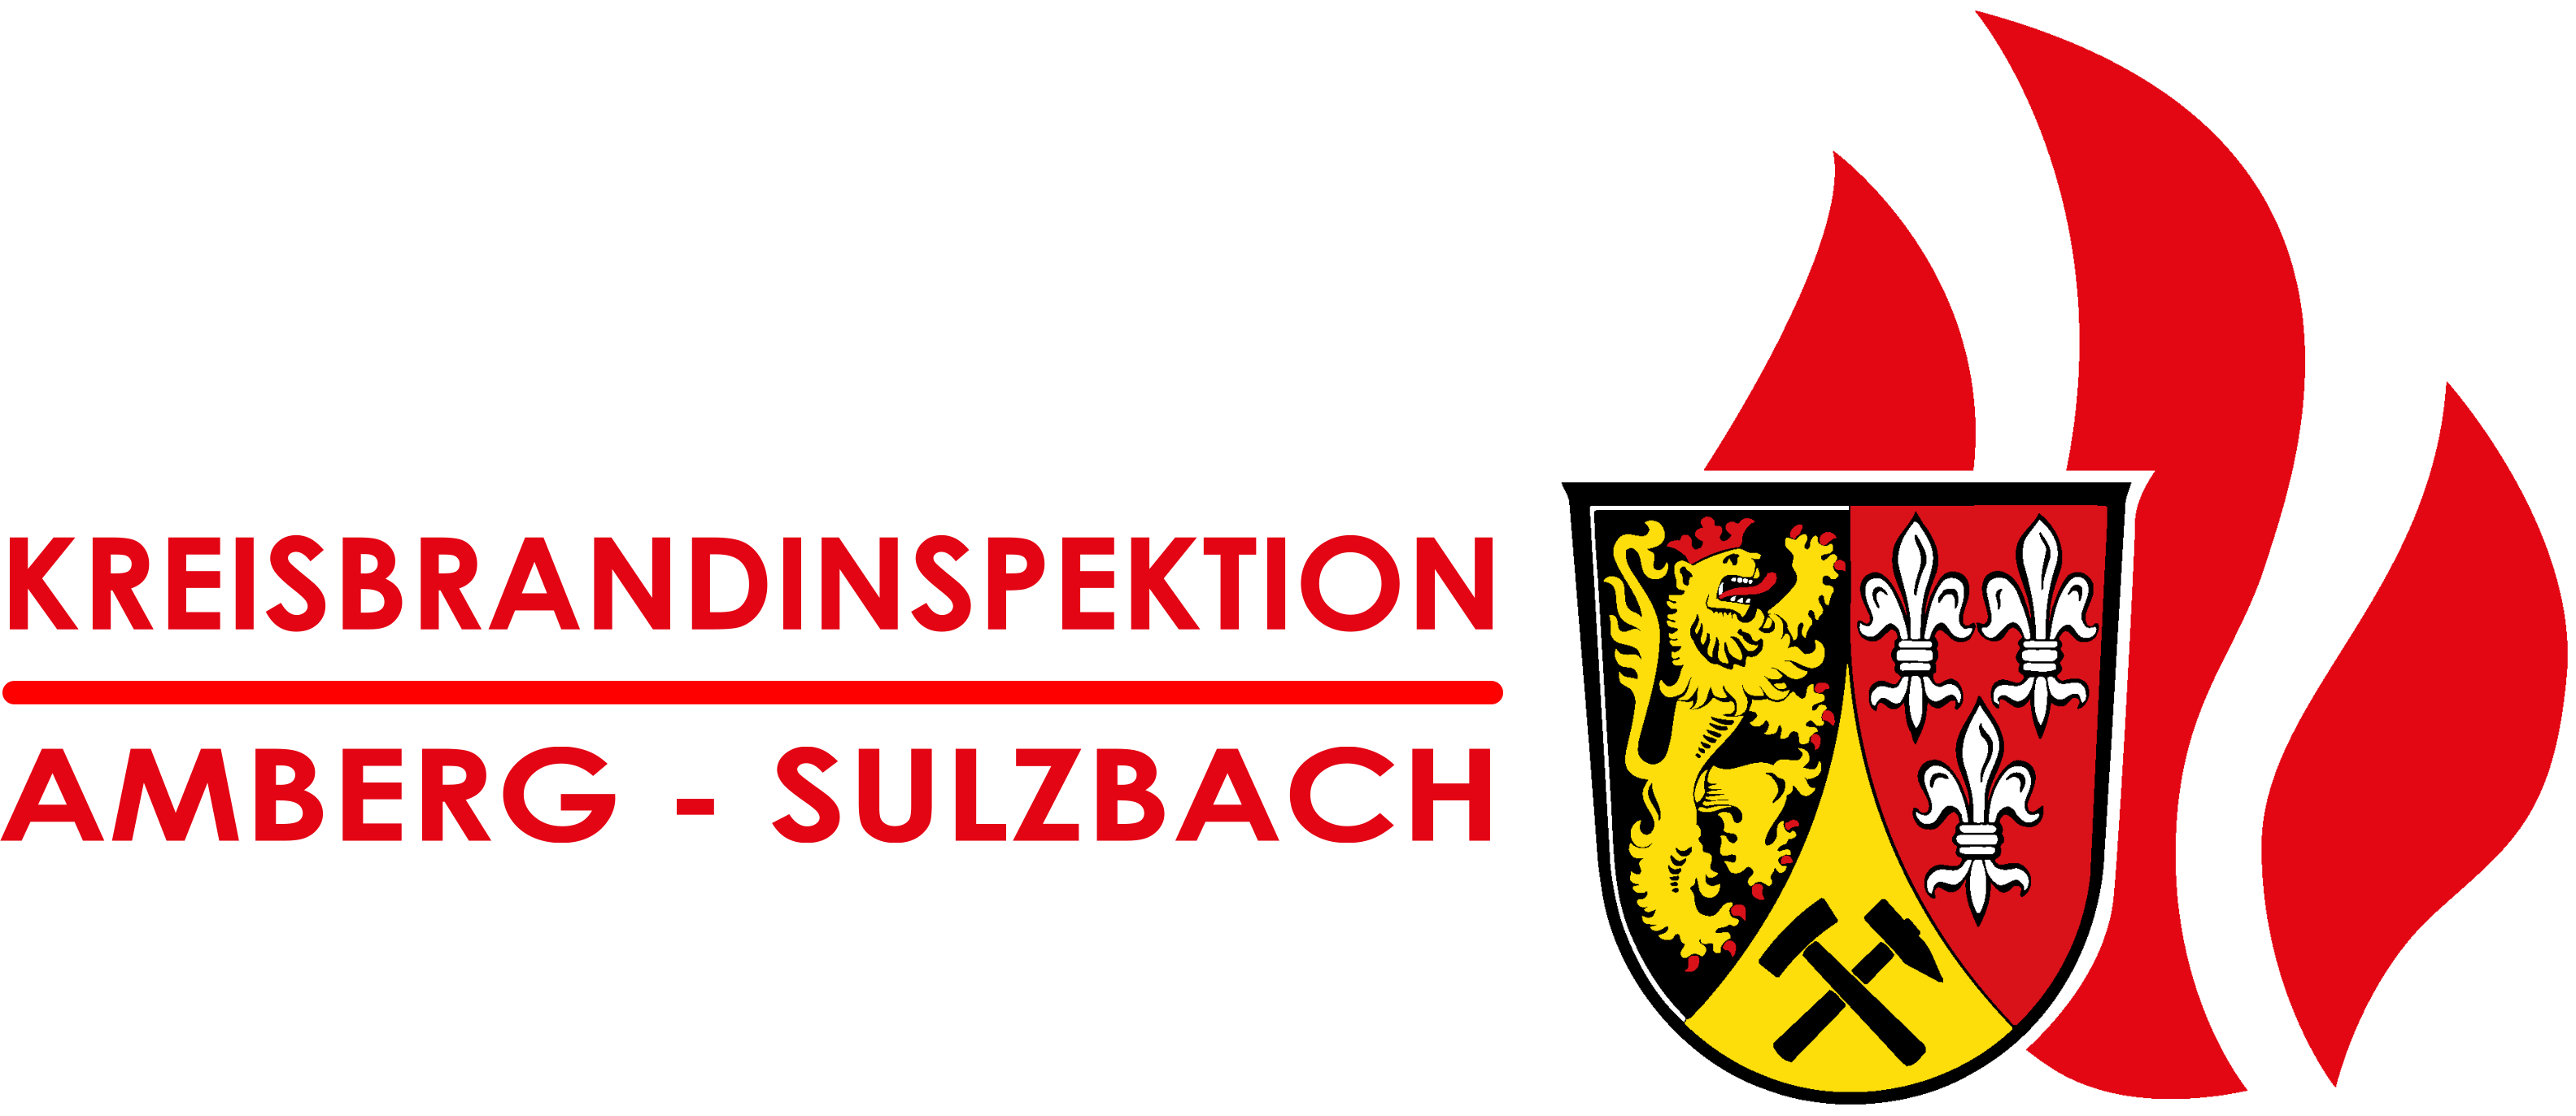 Kreisbrandinspektion Amberg-Sulzbach